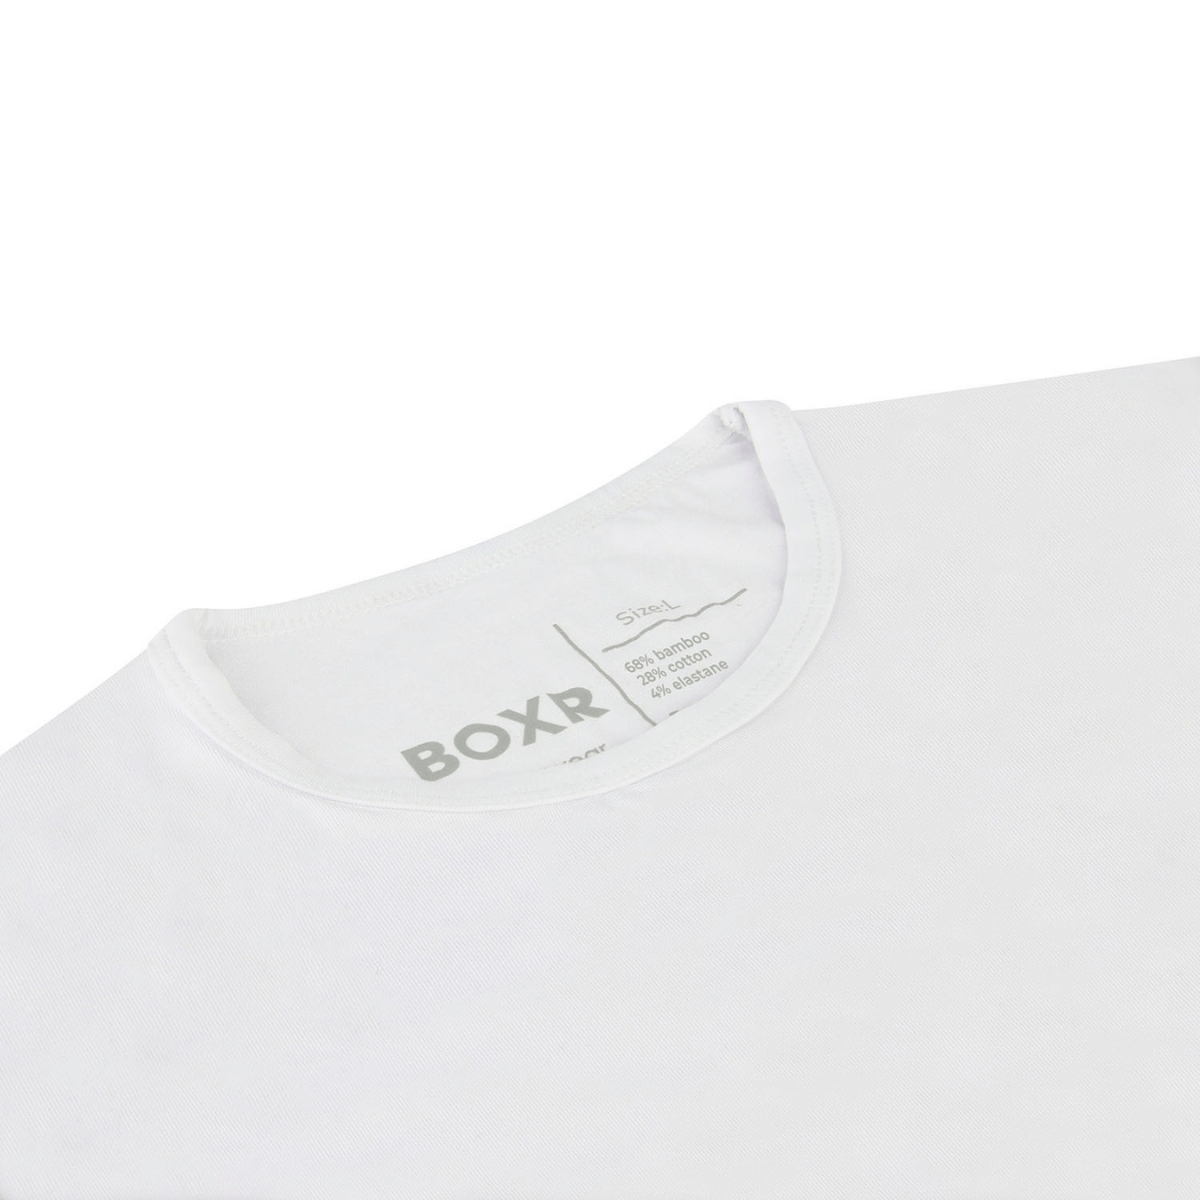 BOXR | Bamboo T-Shirt Longsleeve 4-Pack White